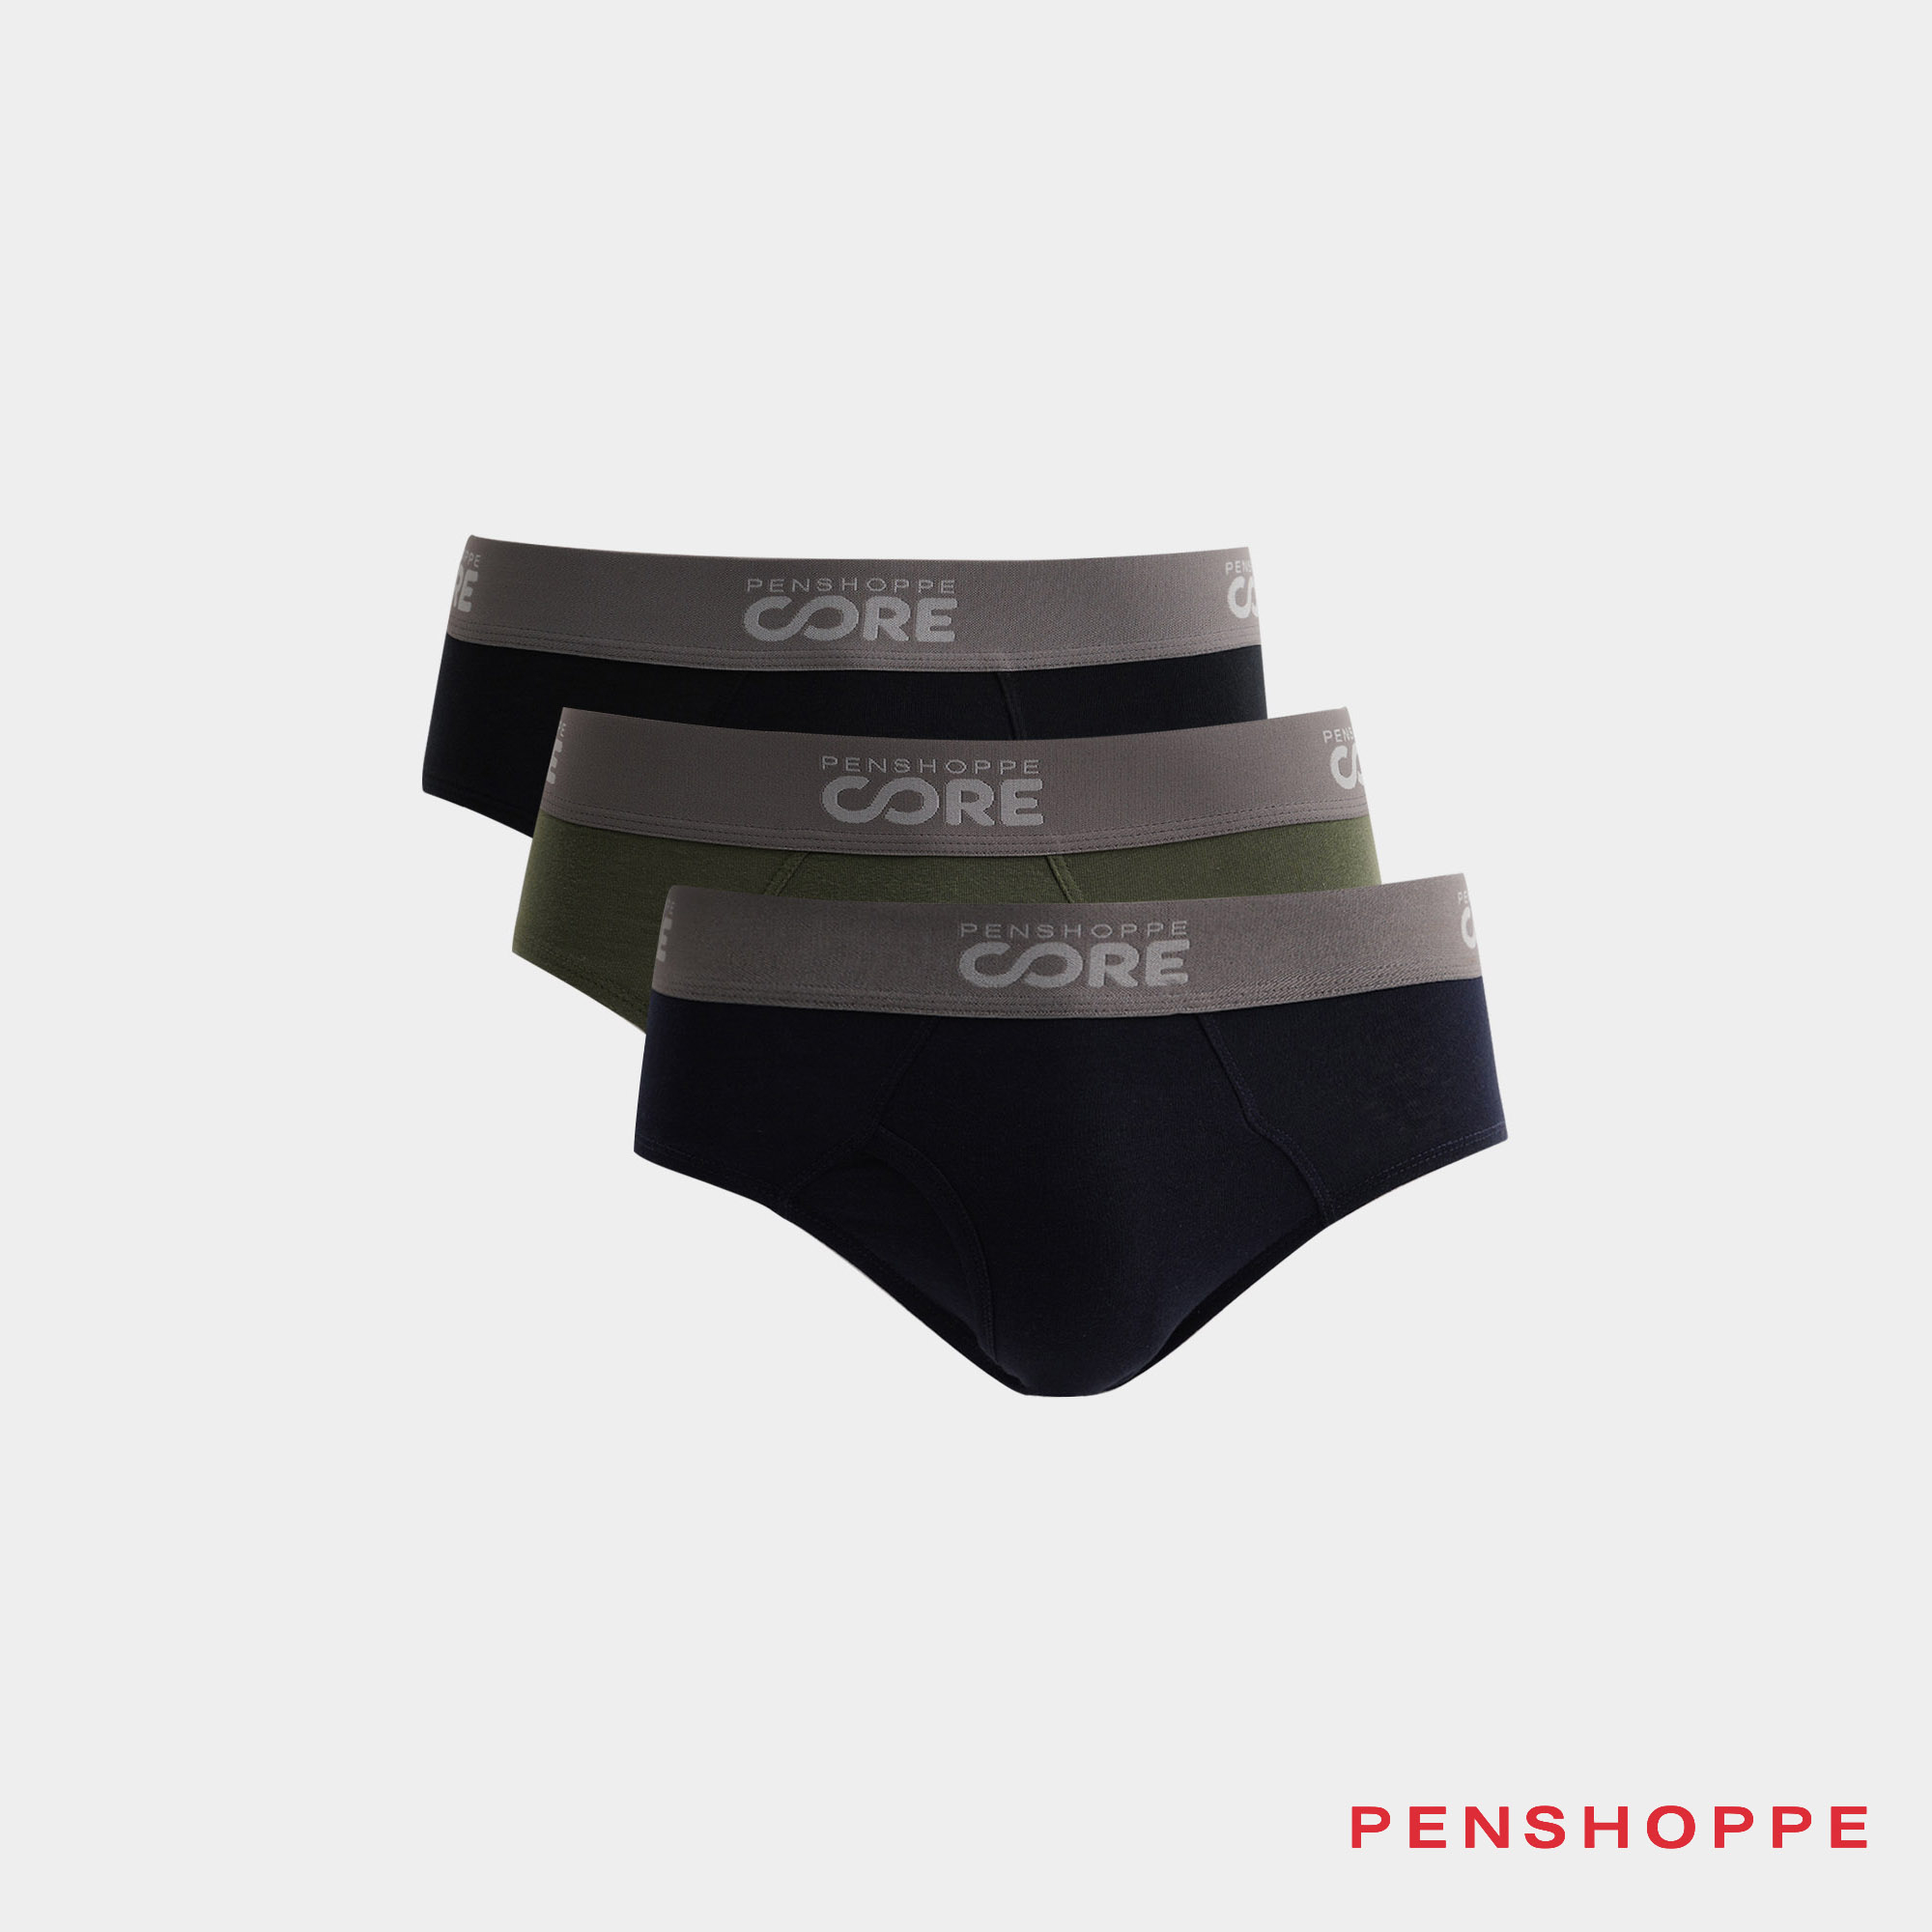 Penshoppe Core Classic Briefs For Men (Black/Charcoal/White)